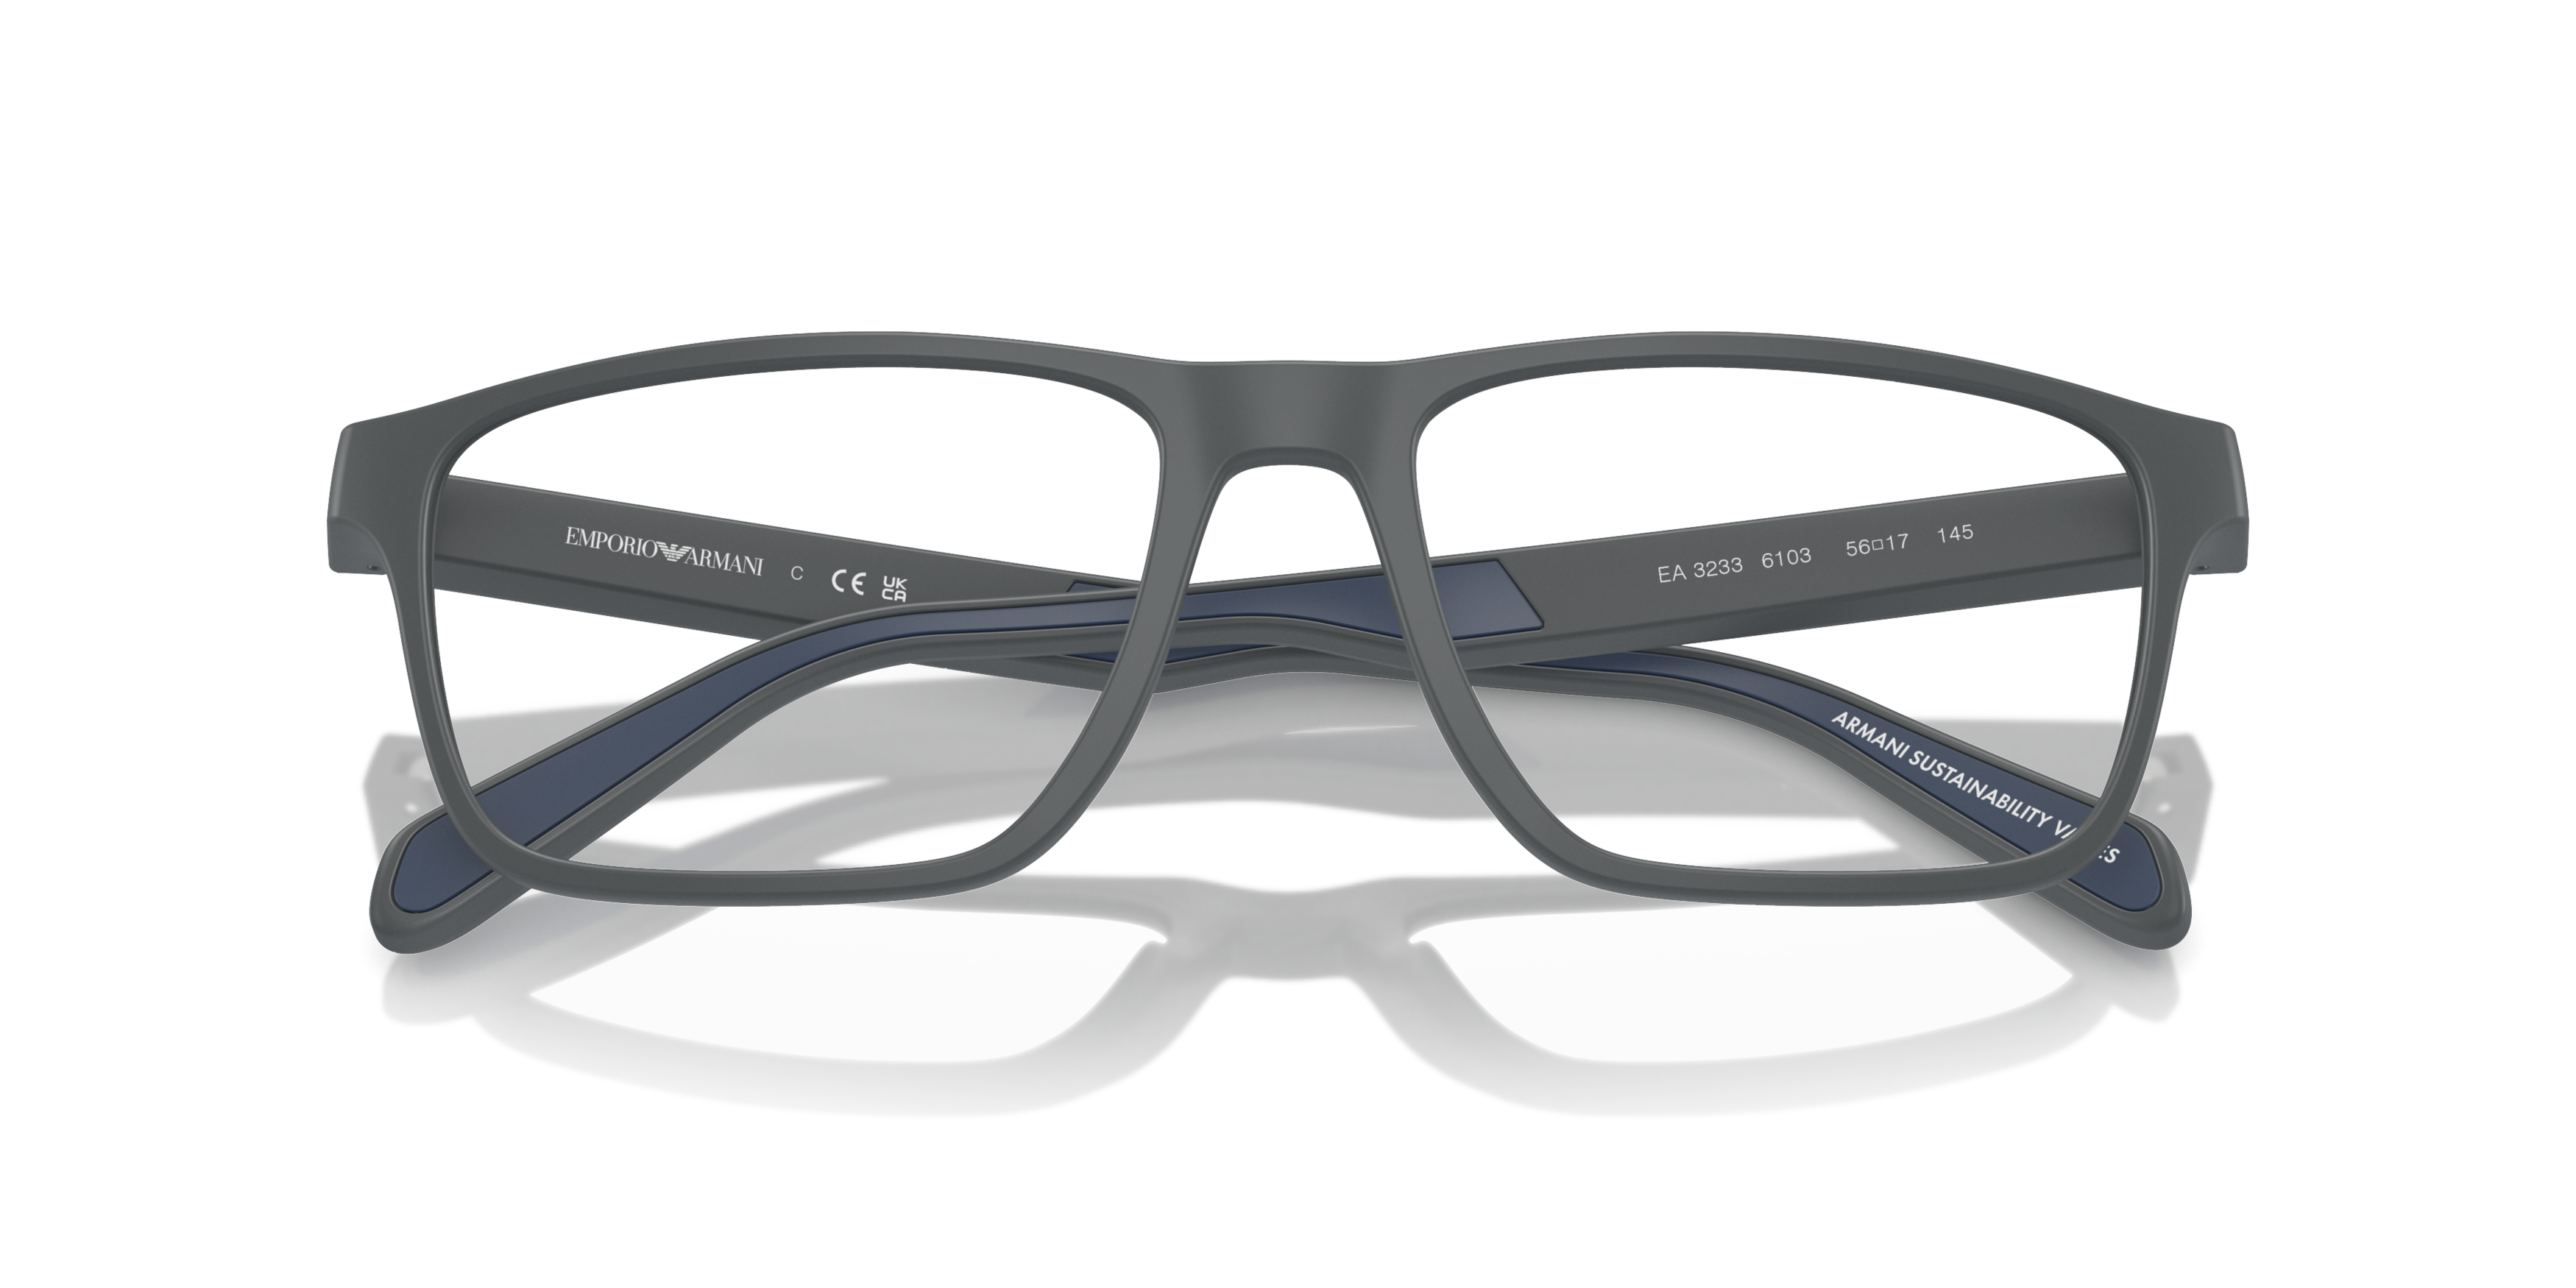 Folded Emporio Armani EA 3233 Glasses Transparent / Black